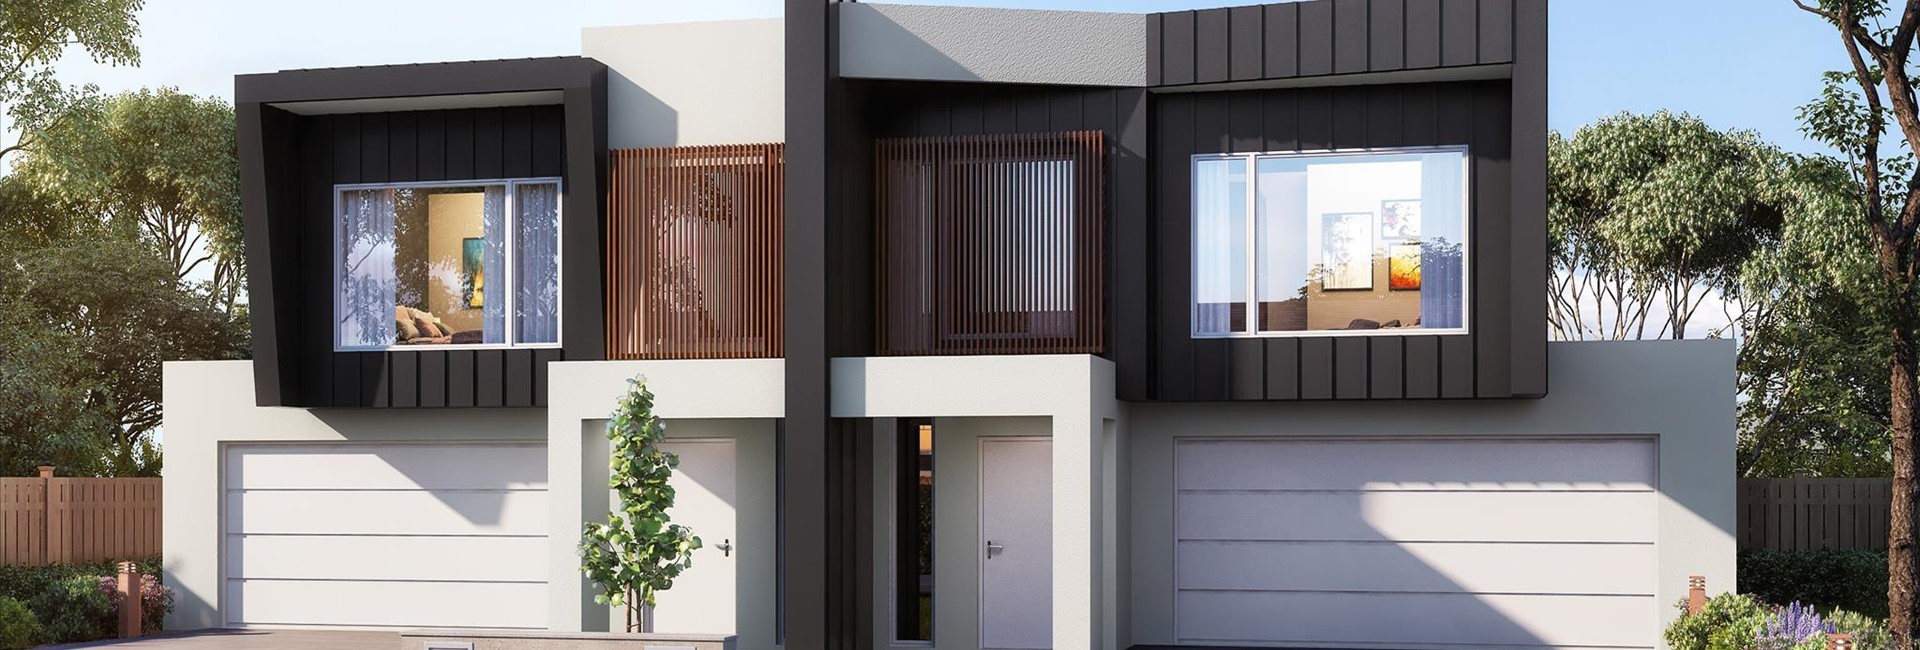 Standard Design Floor Plans Integrity New Homes